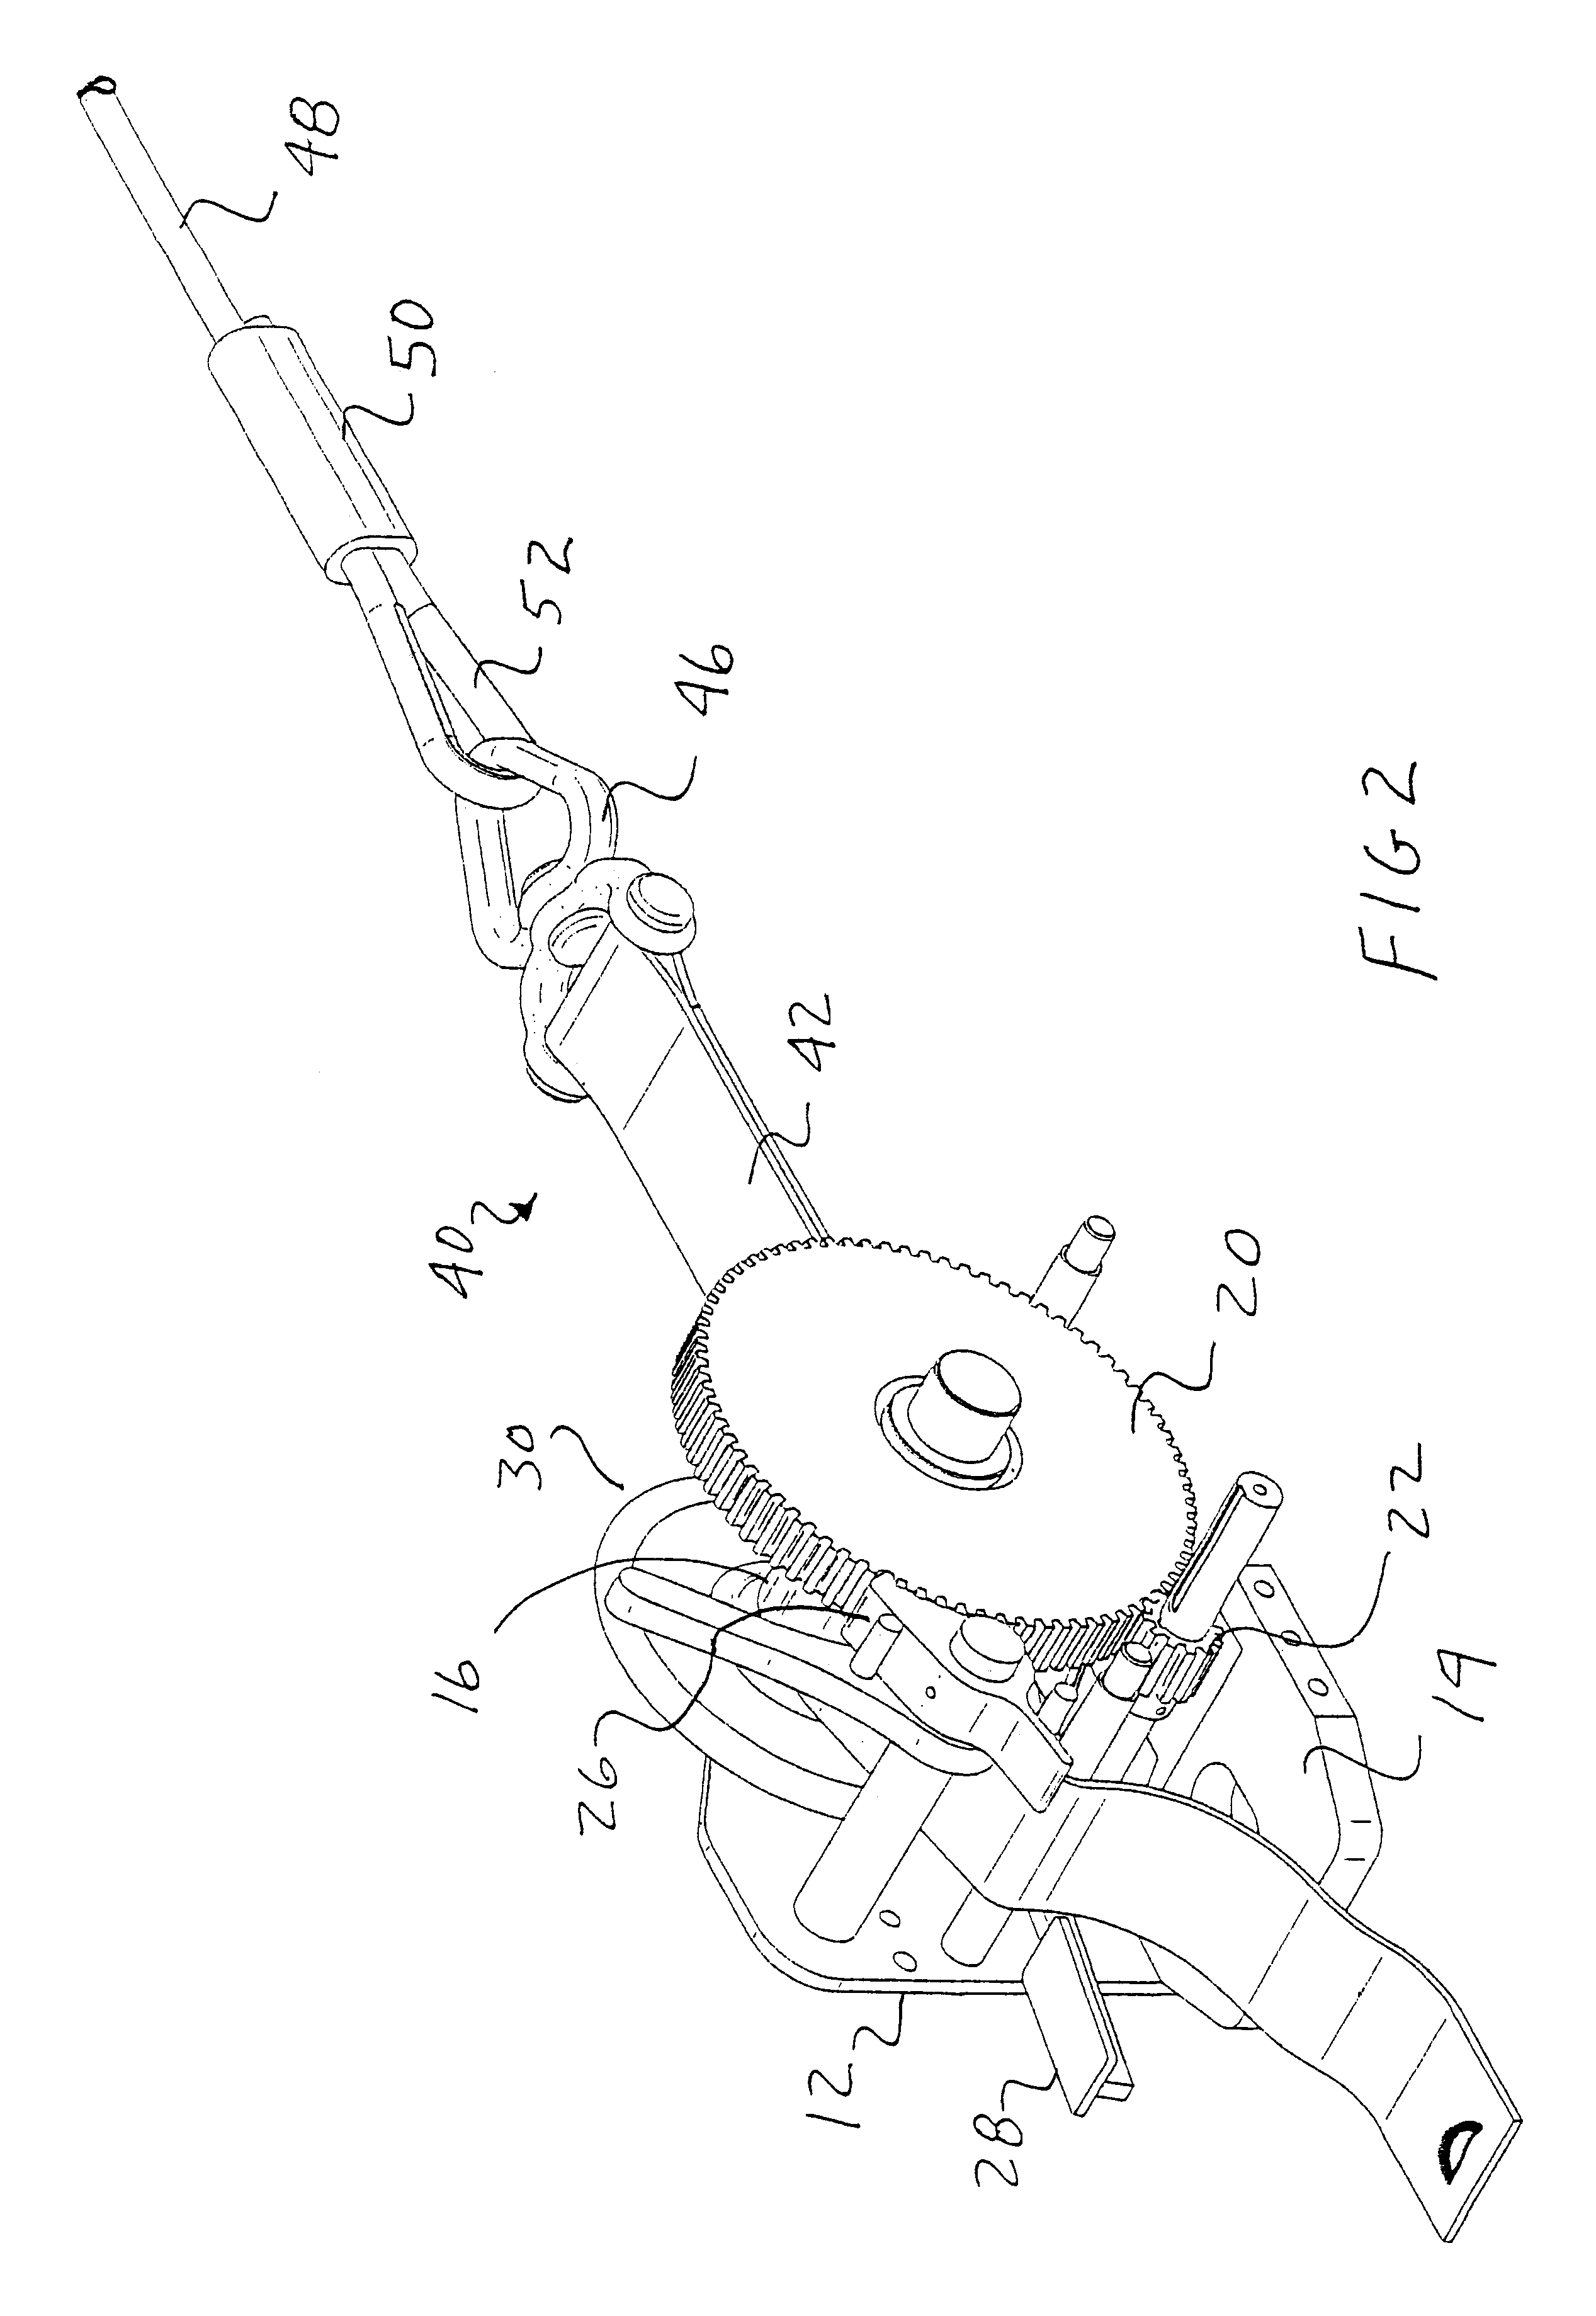 Manual marine winch with lead in webbing strap